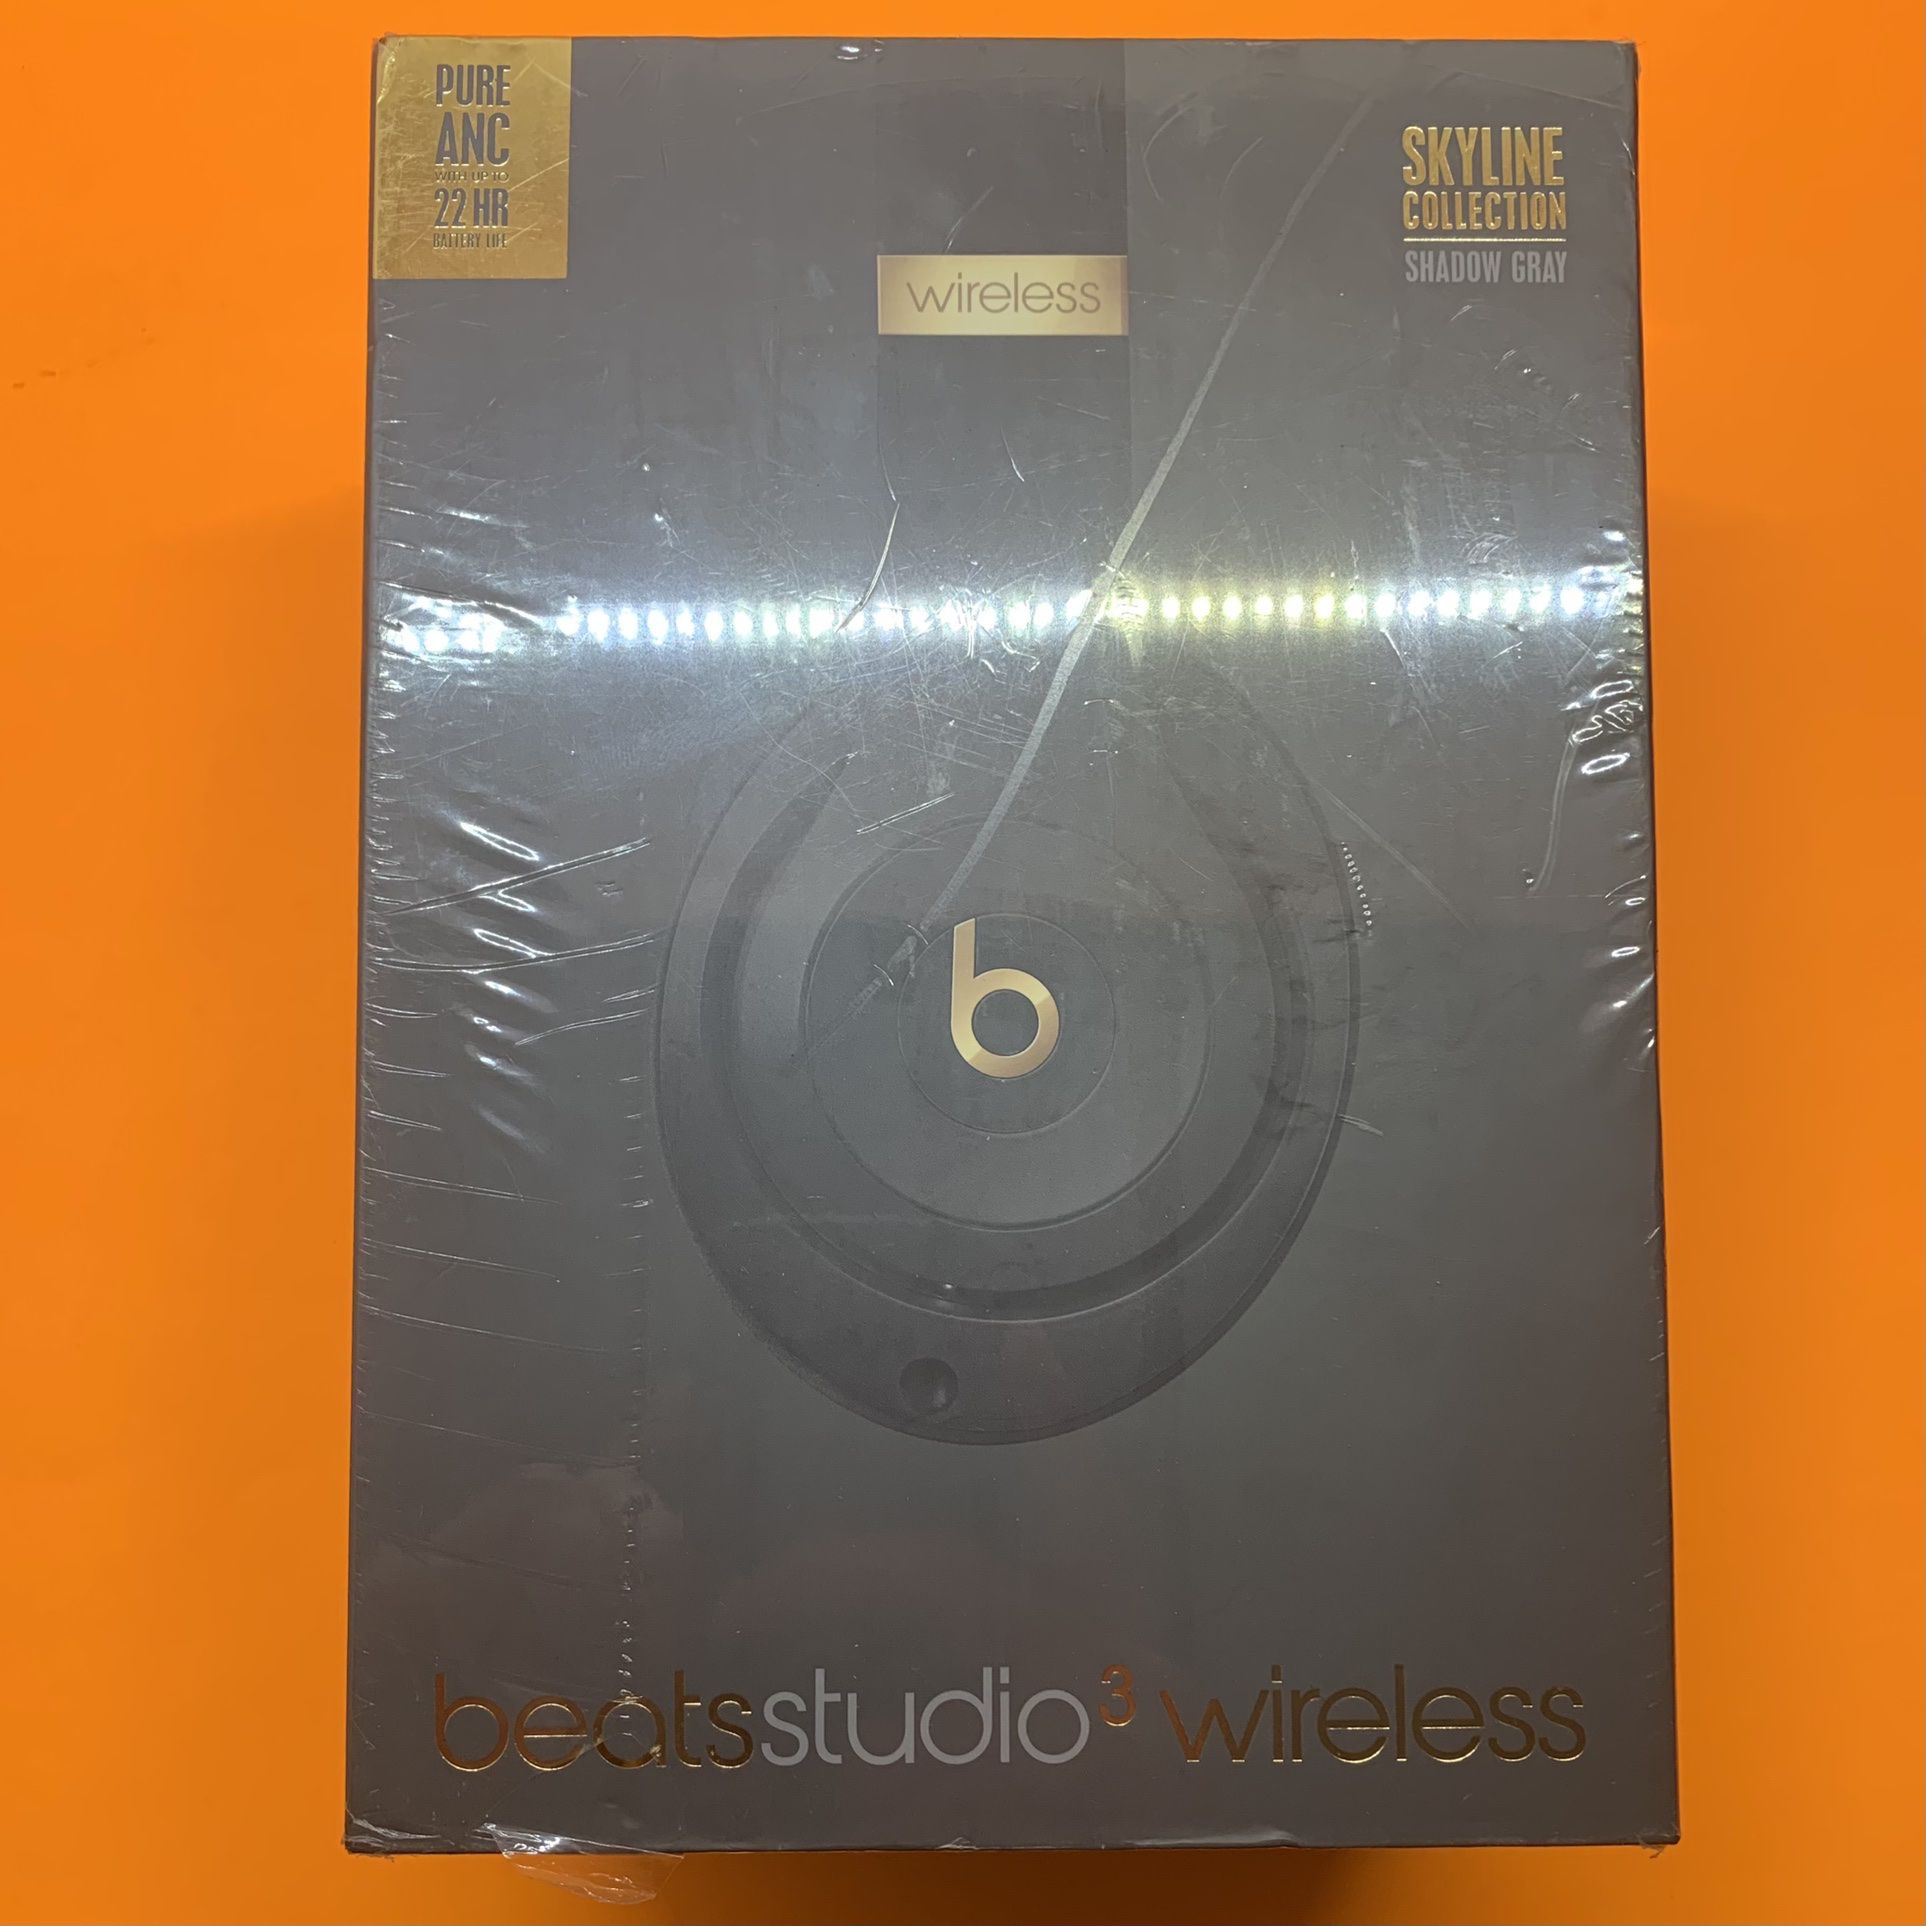 Beats, Studio 3 Wireless, Skyline Collection, Shadow Gray